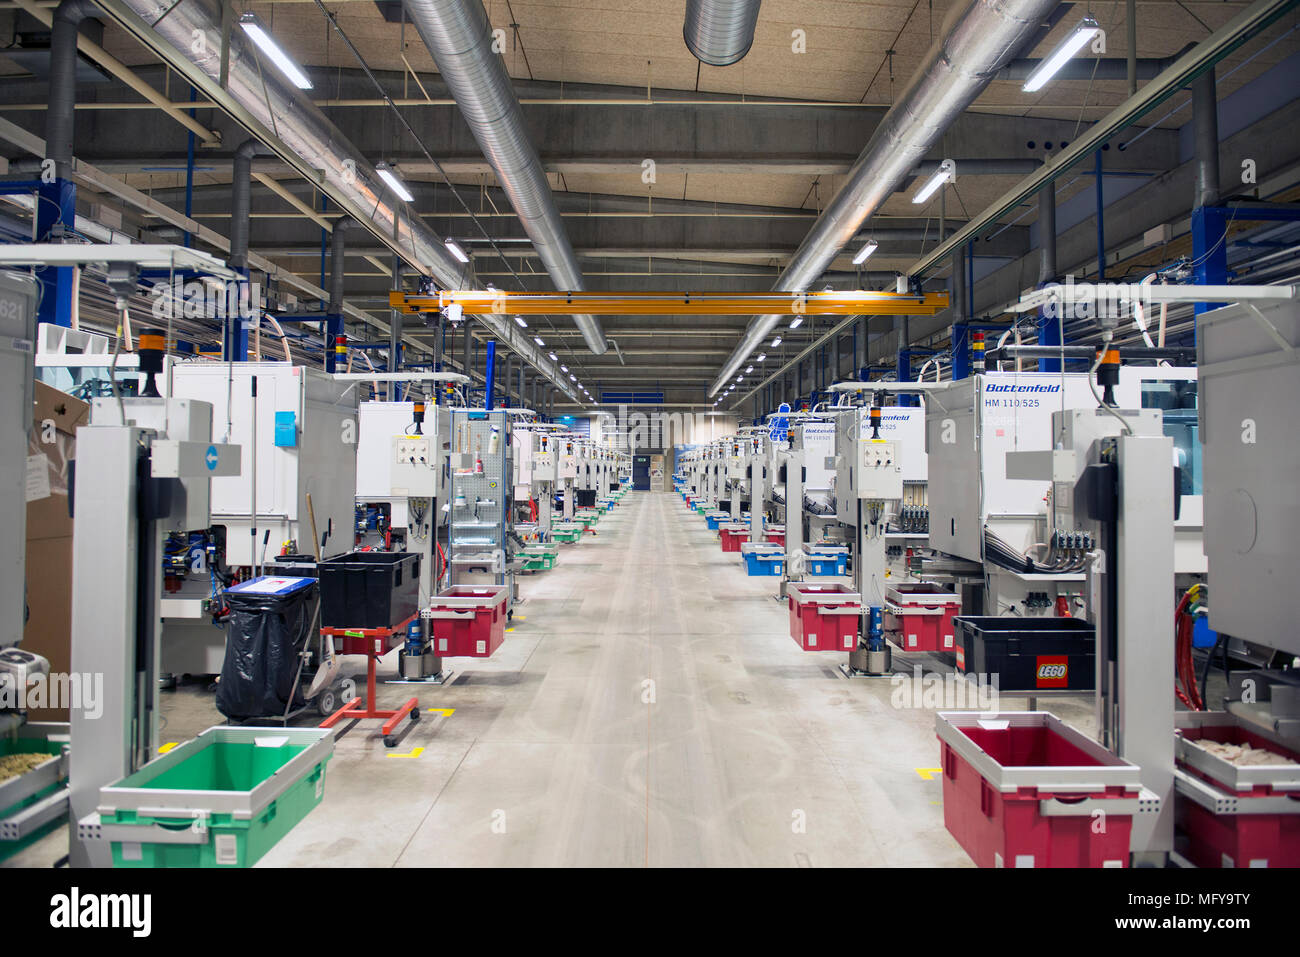 LEGO production factory in Billund Stock Photo - Alamy